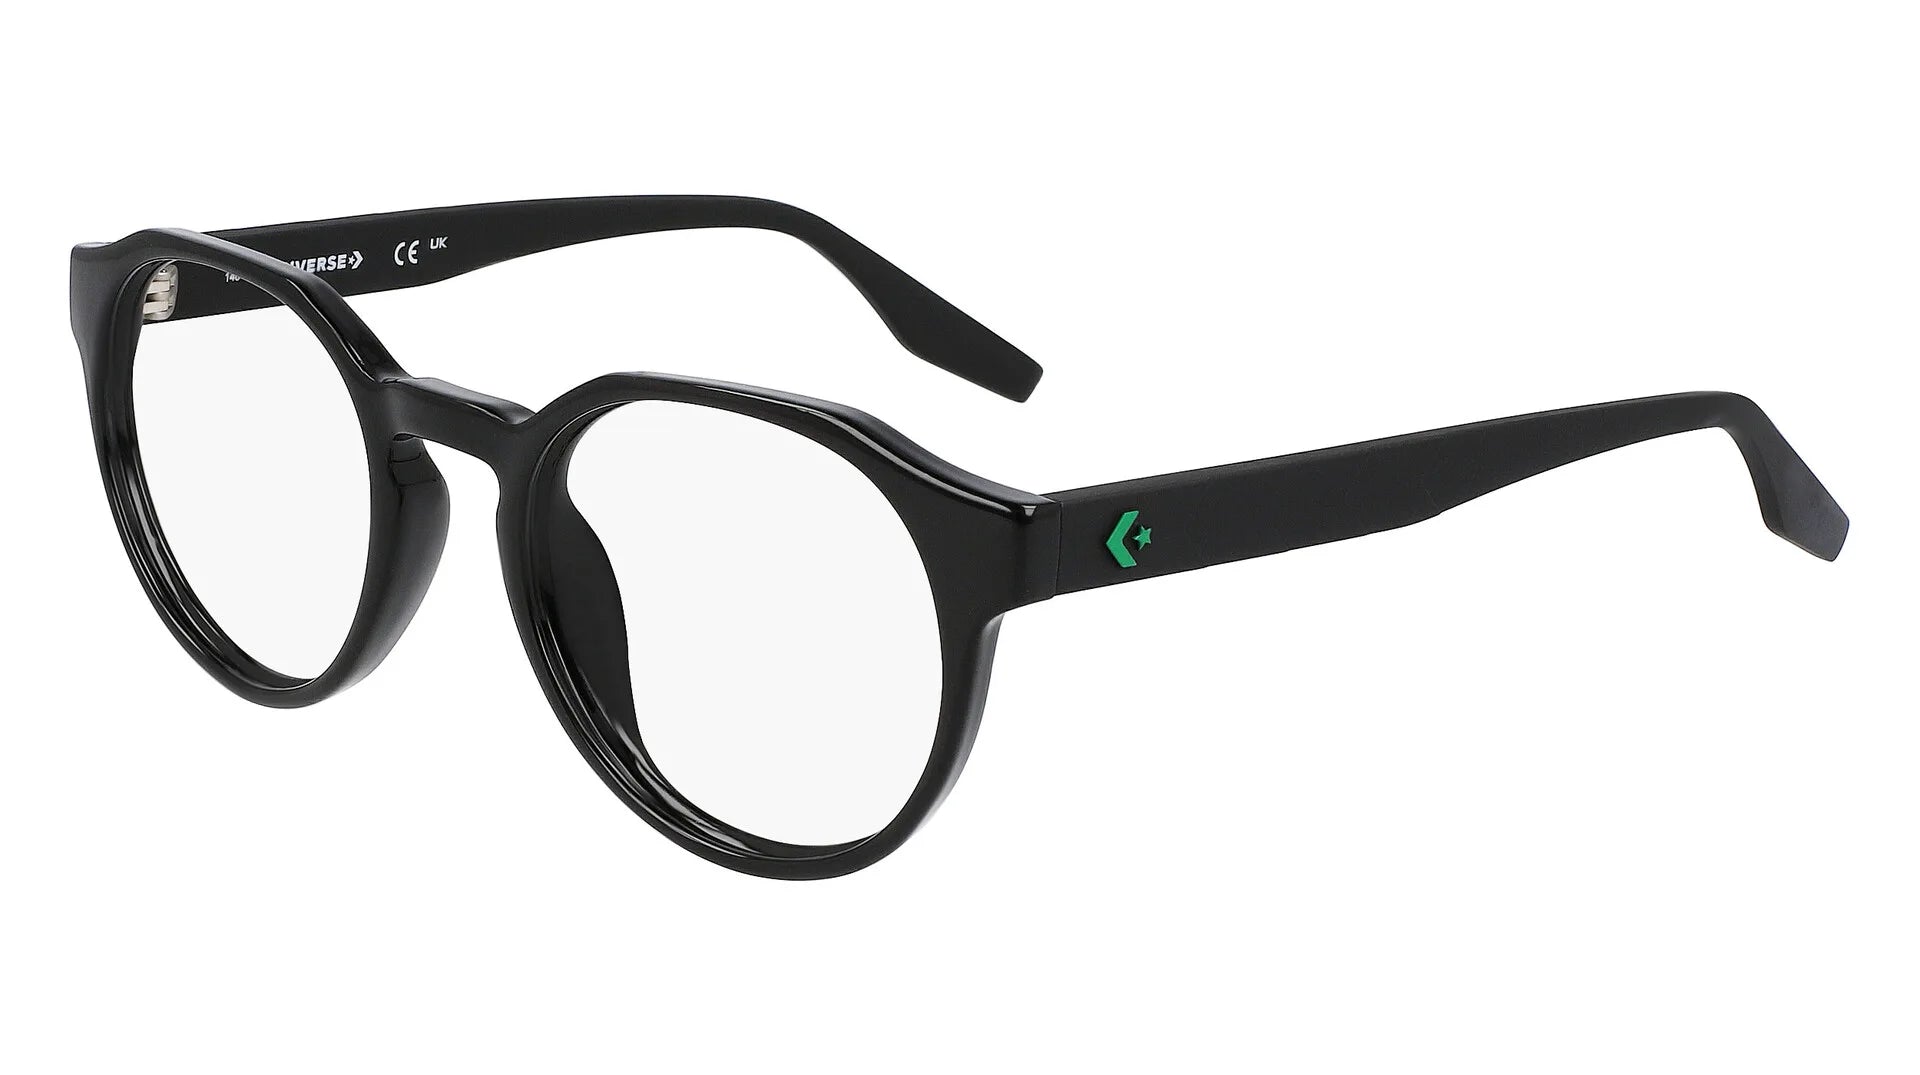 Converse CV5069 Eyeglasses Black